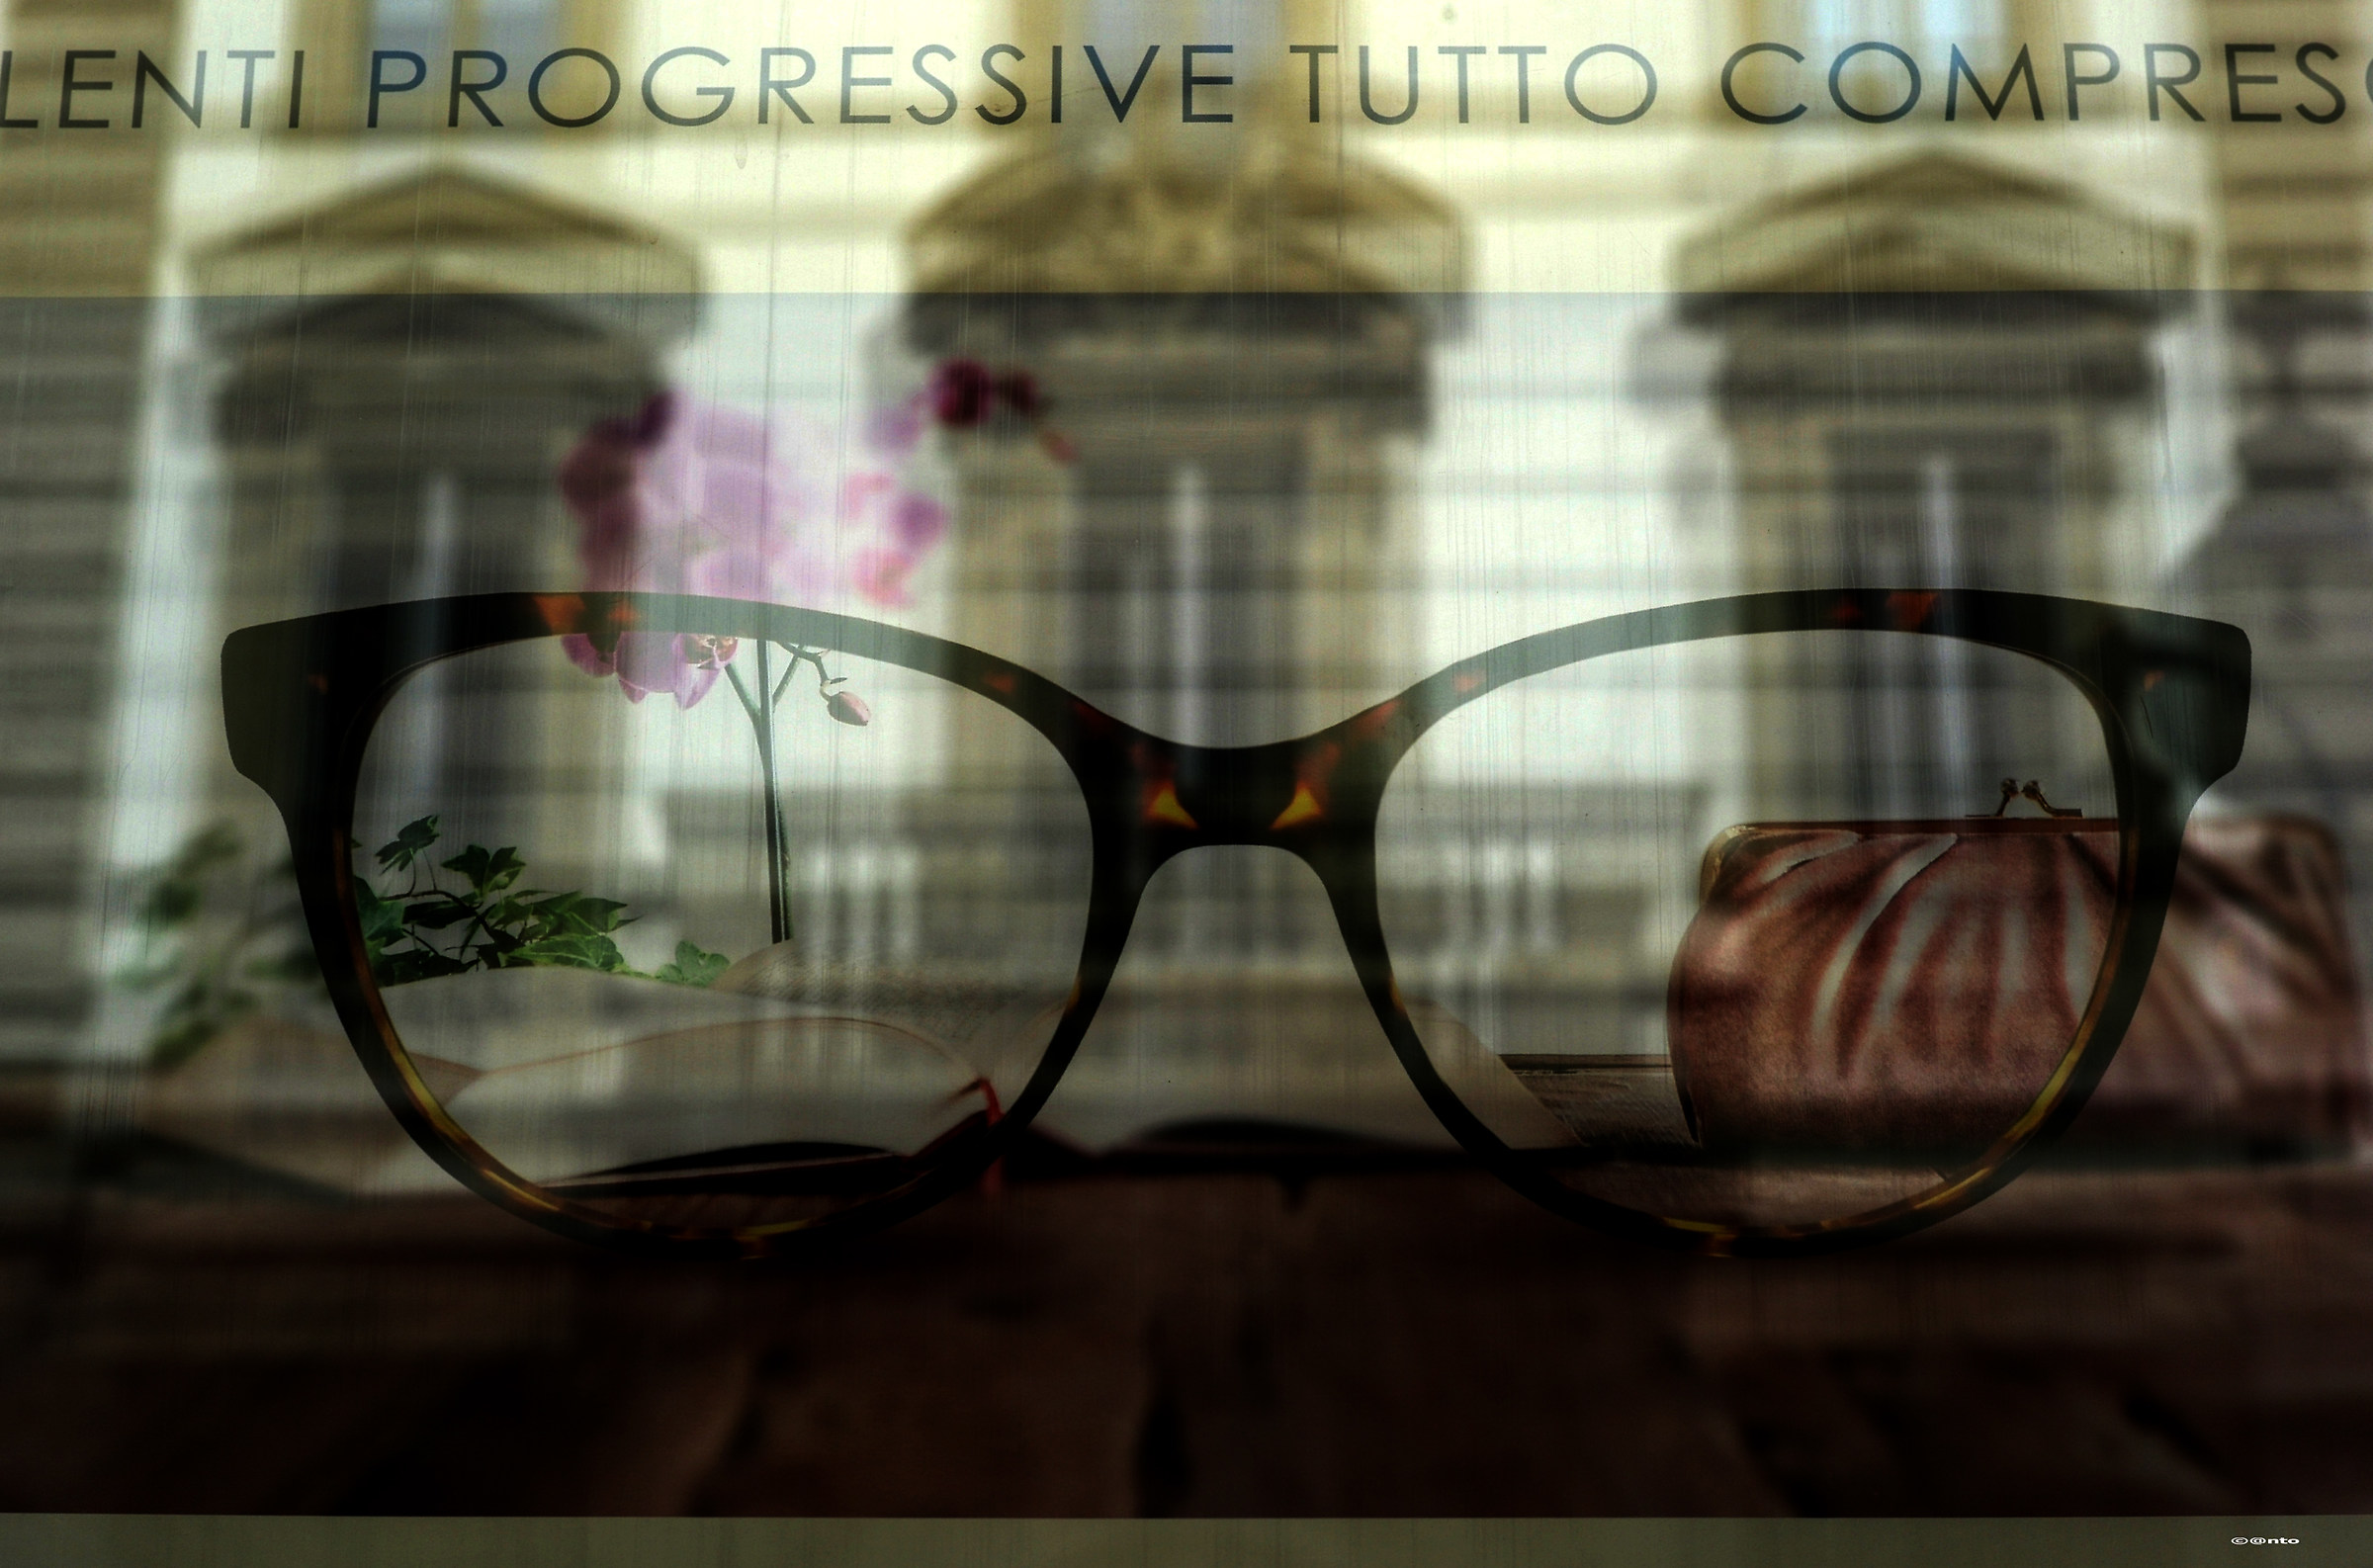 progressive lenses, near and far...